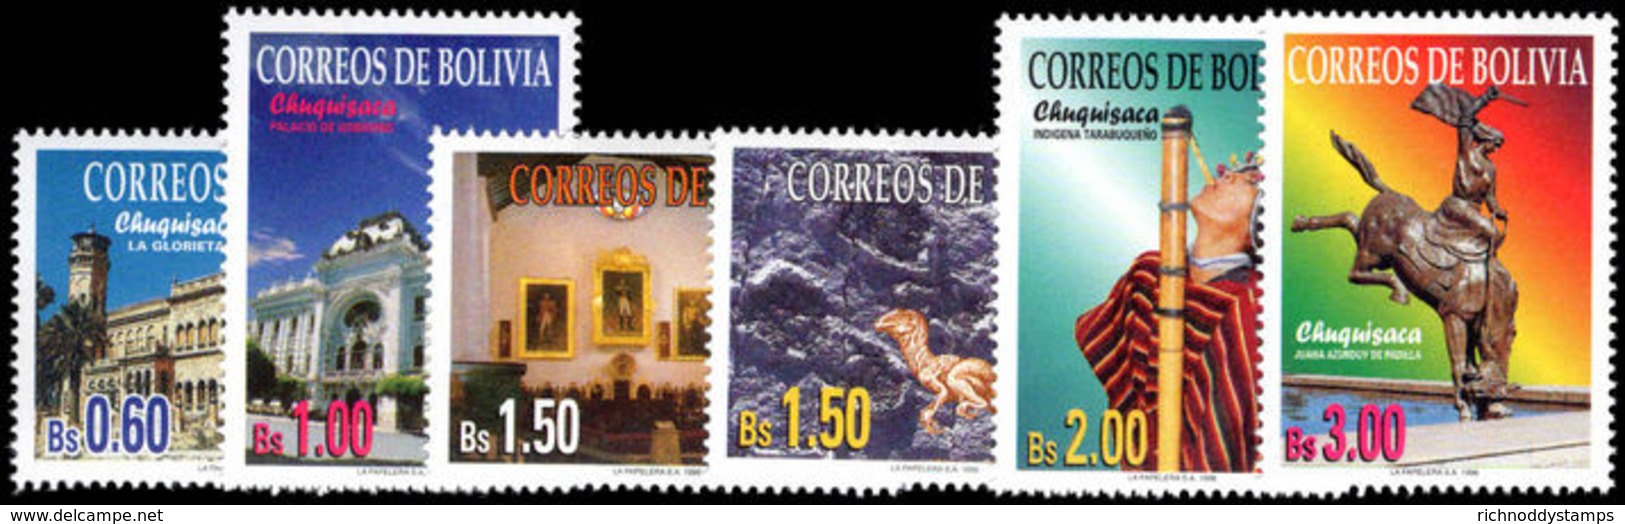 Bolivia 1997 Chuquisaca Unmounted Mint. - Bolivia